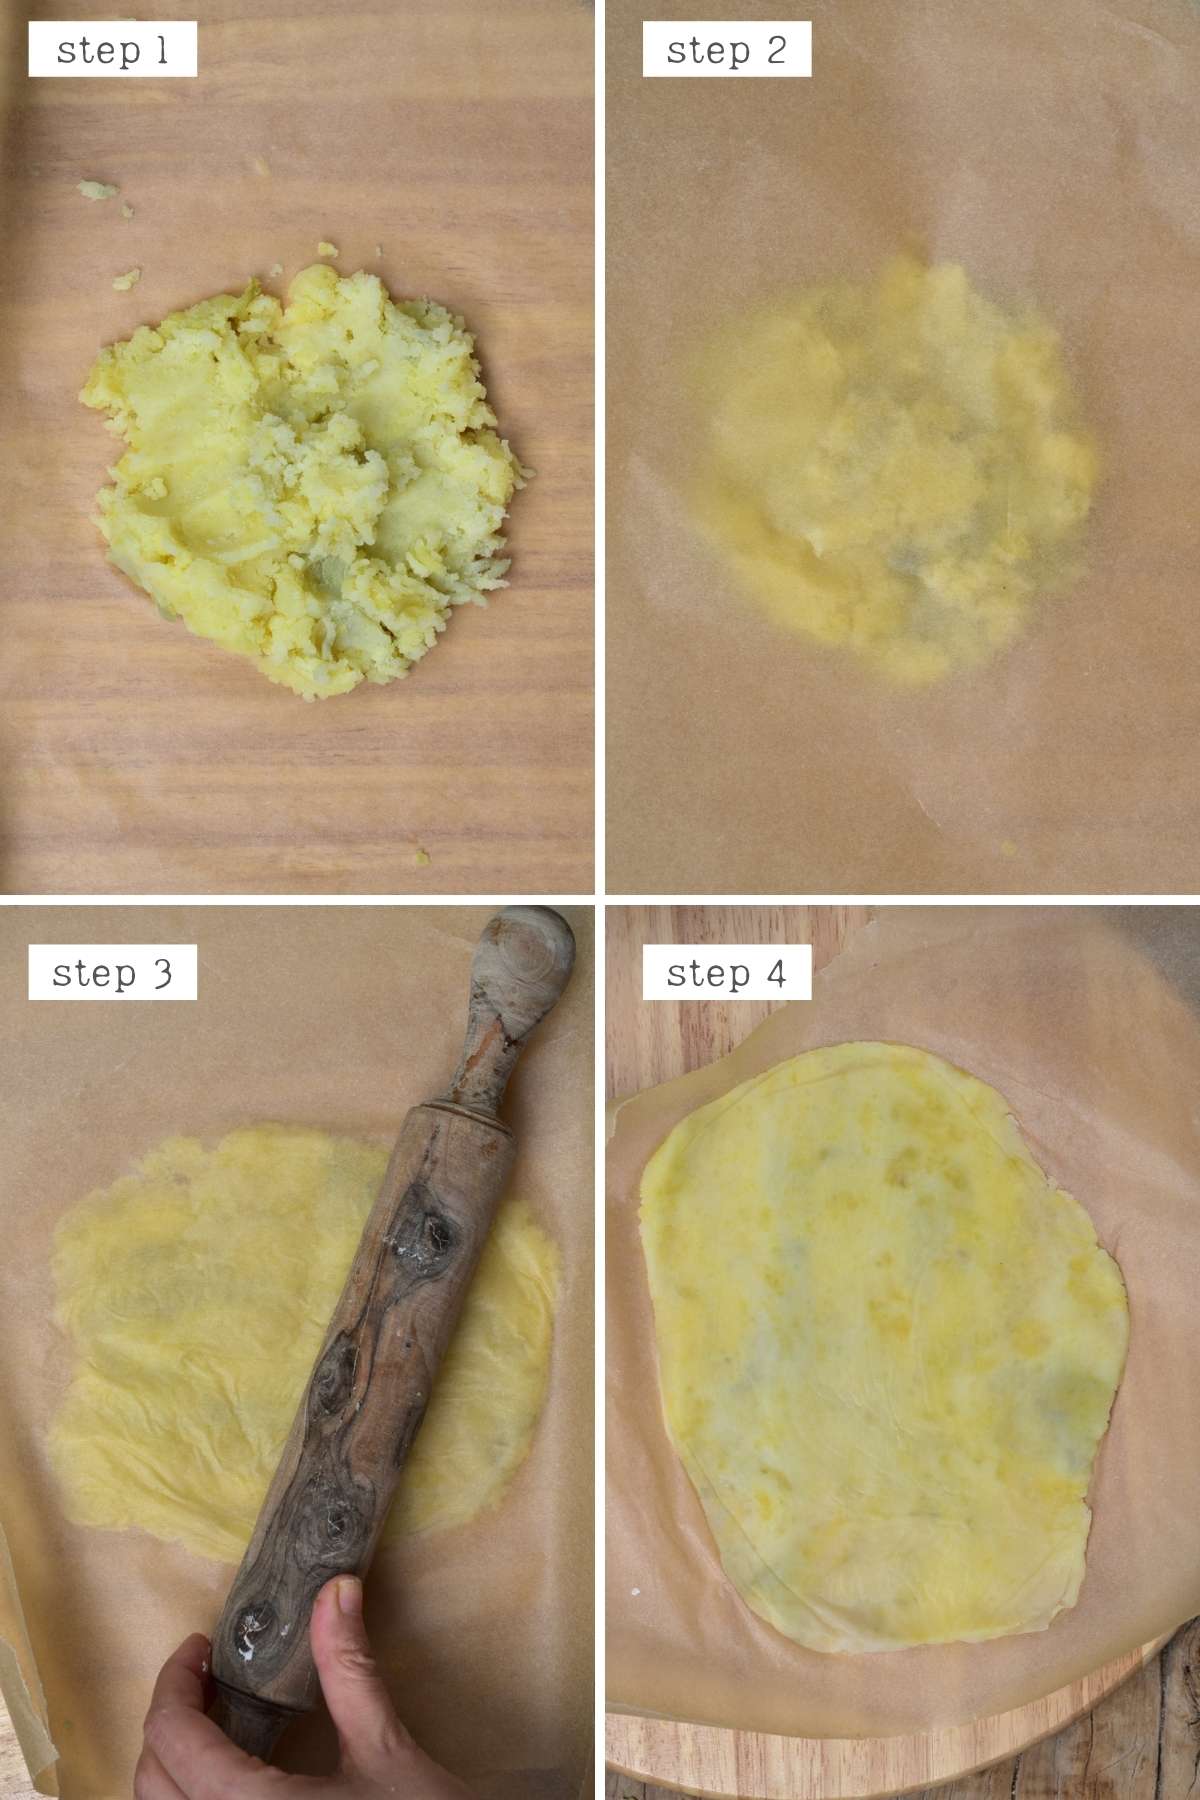 Steps for making potato flatbread